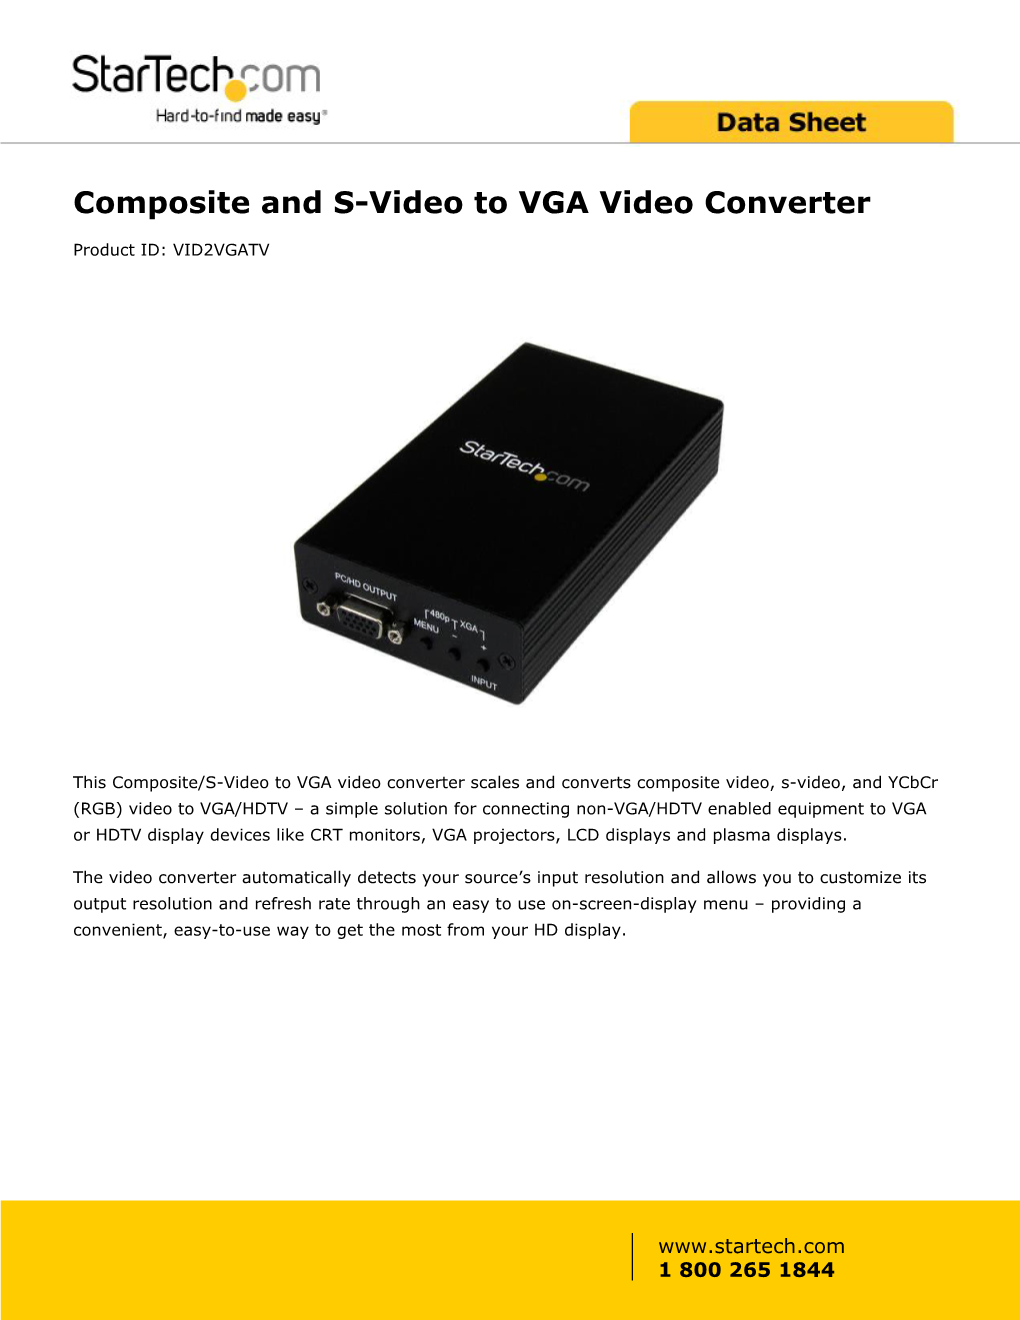 Composite S-Video to VGA Video Converter